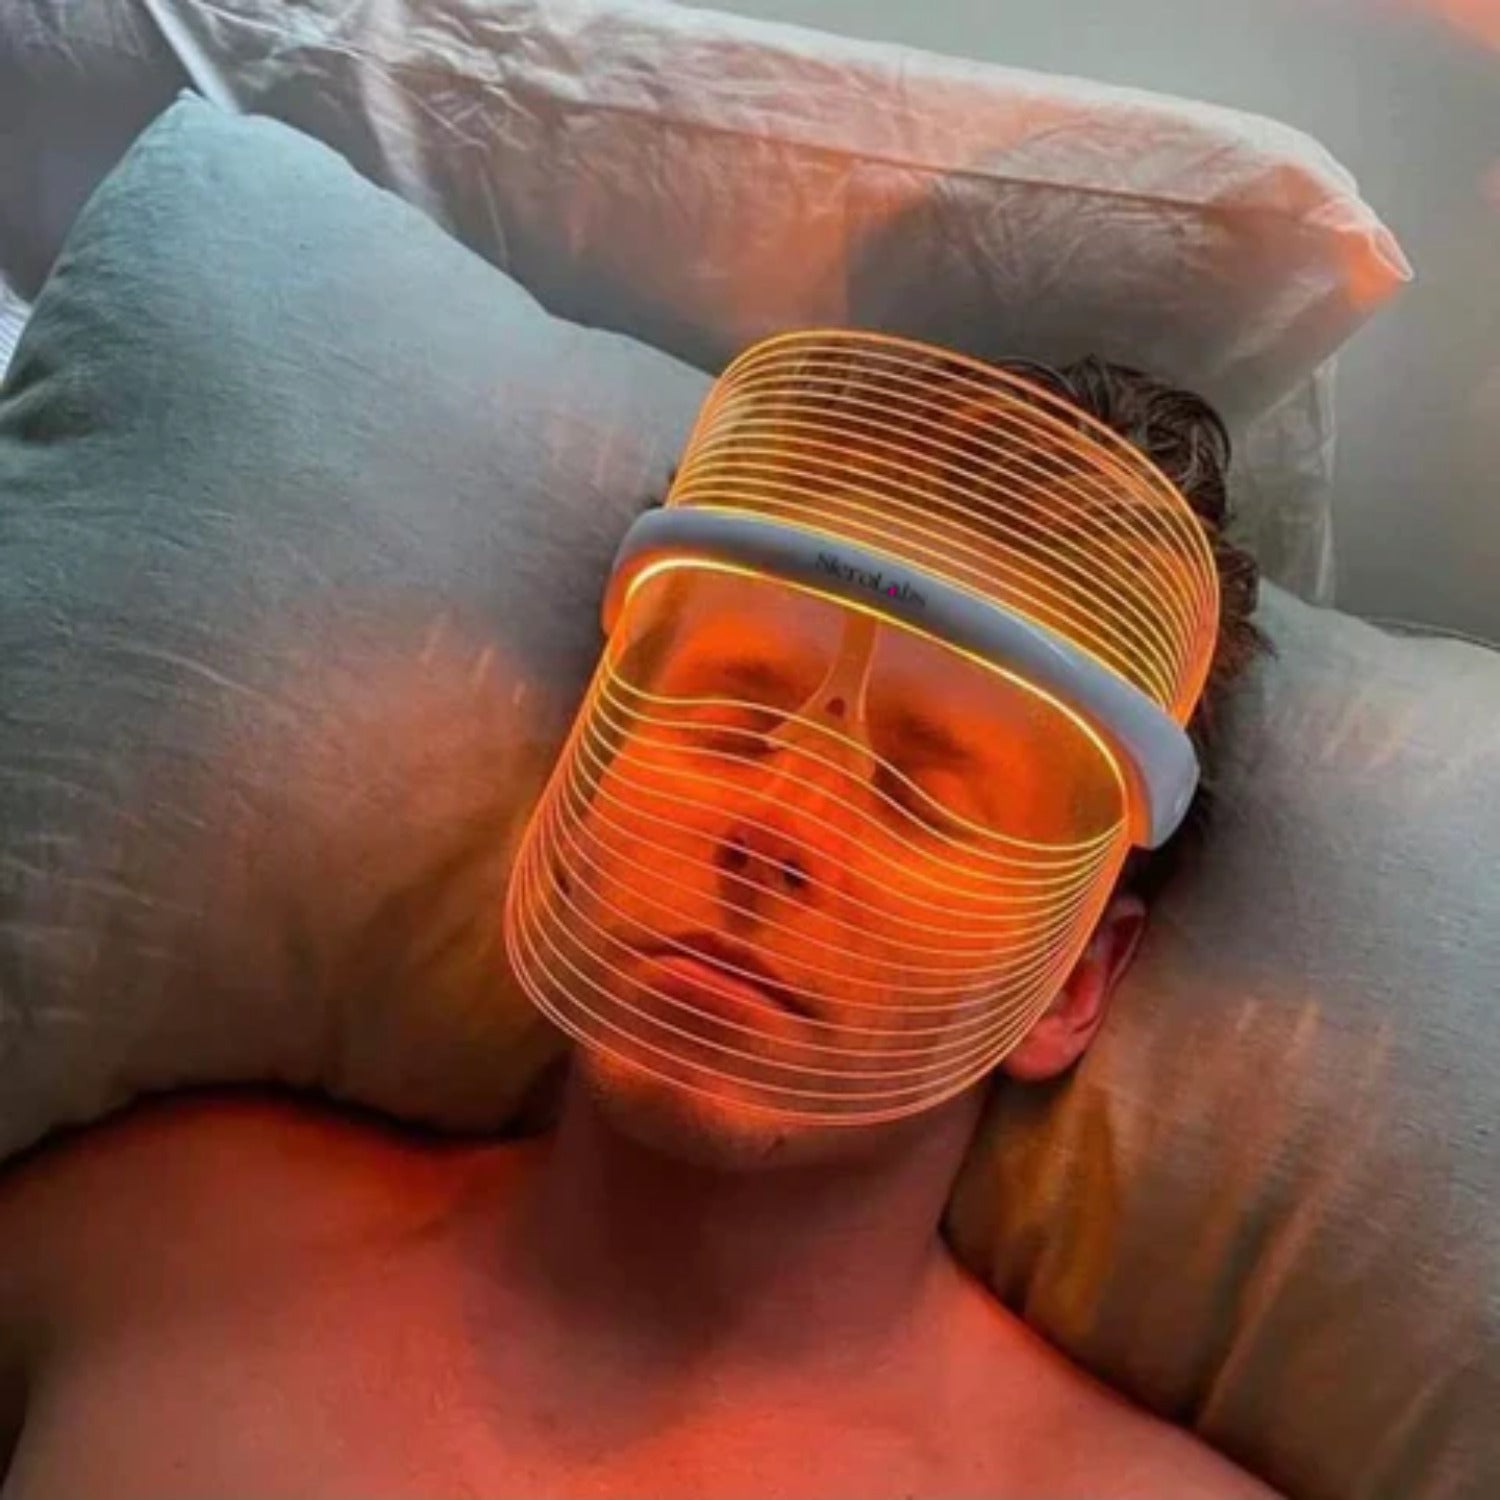 Sierolabs® Maschera LED per una Skincare Completa